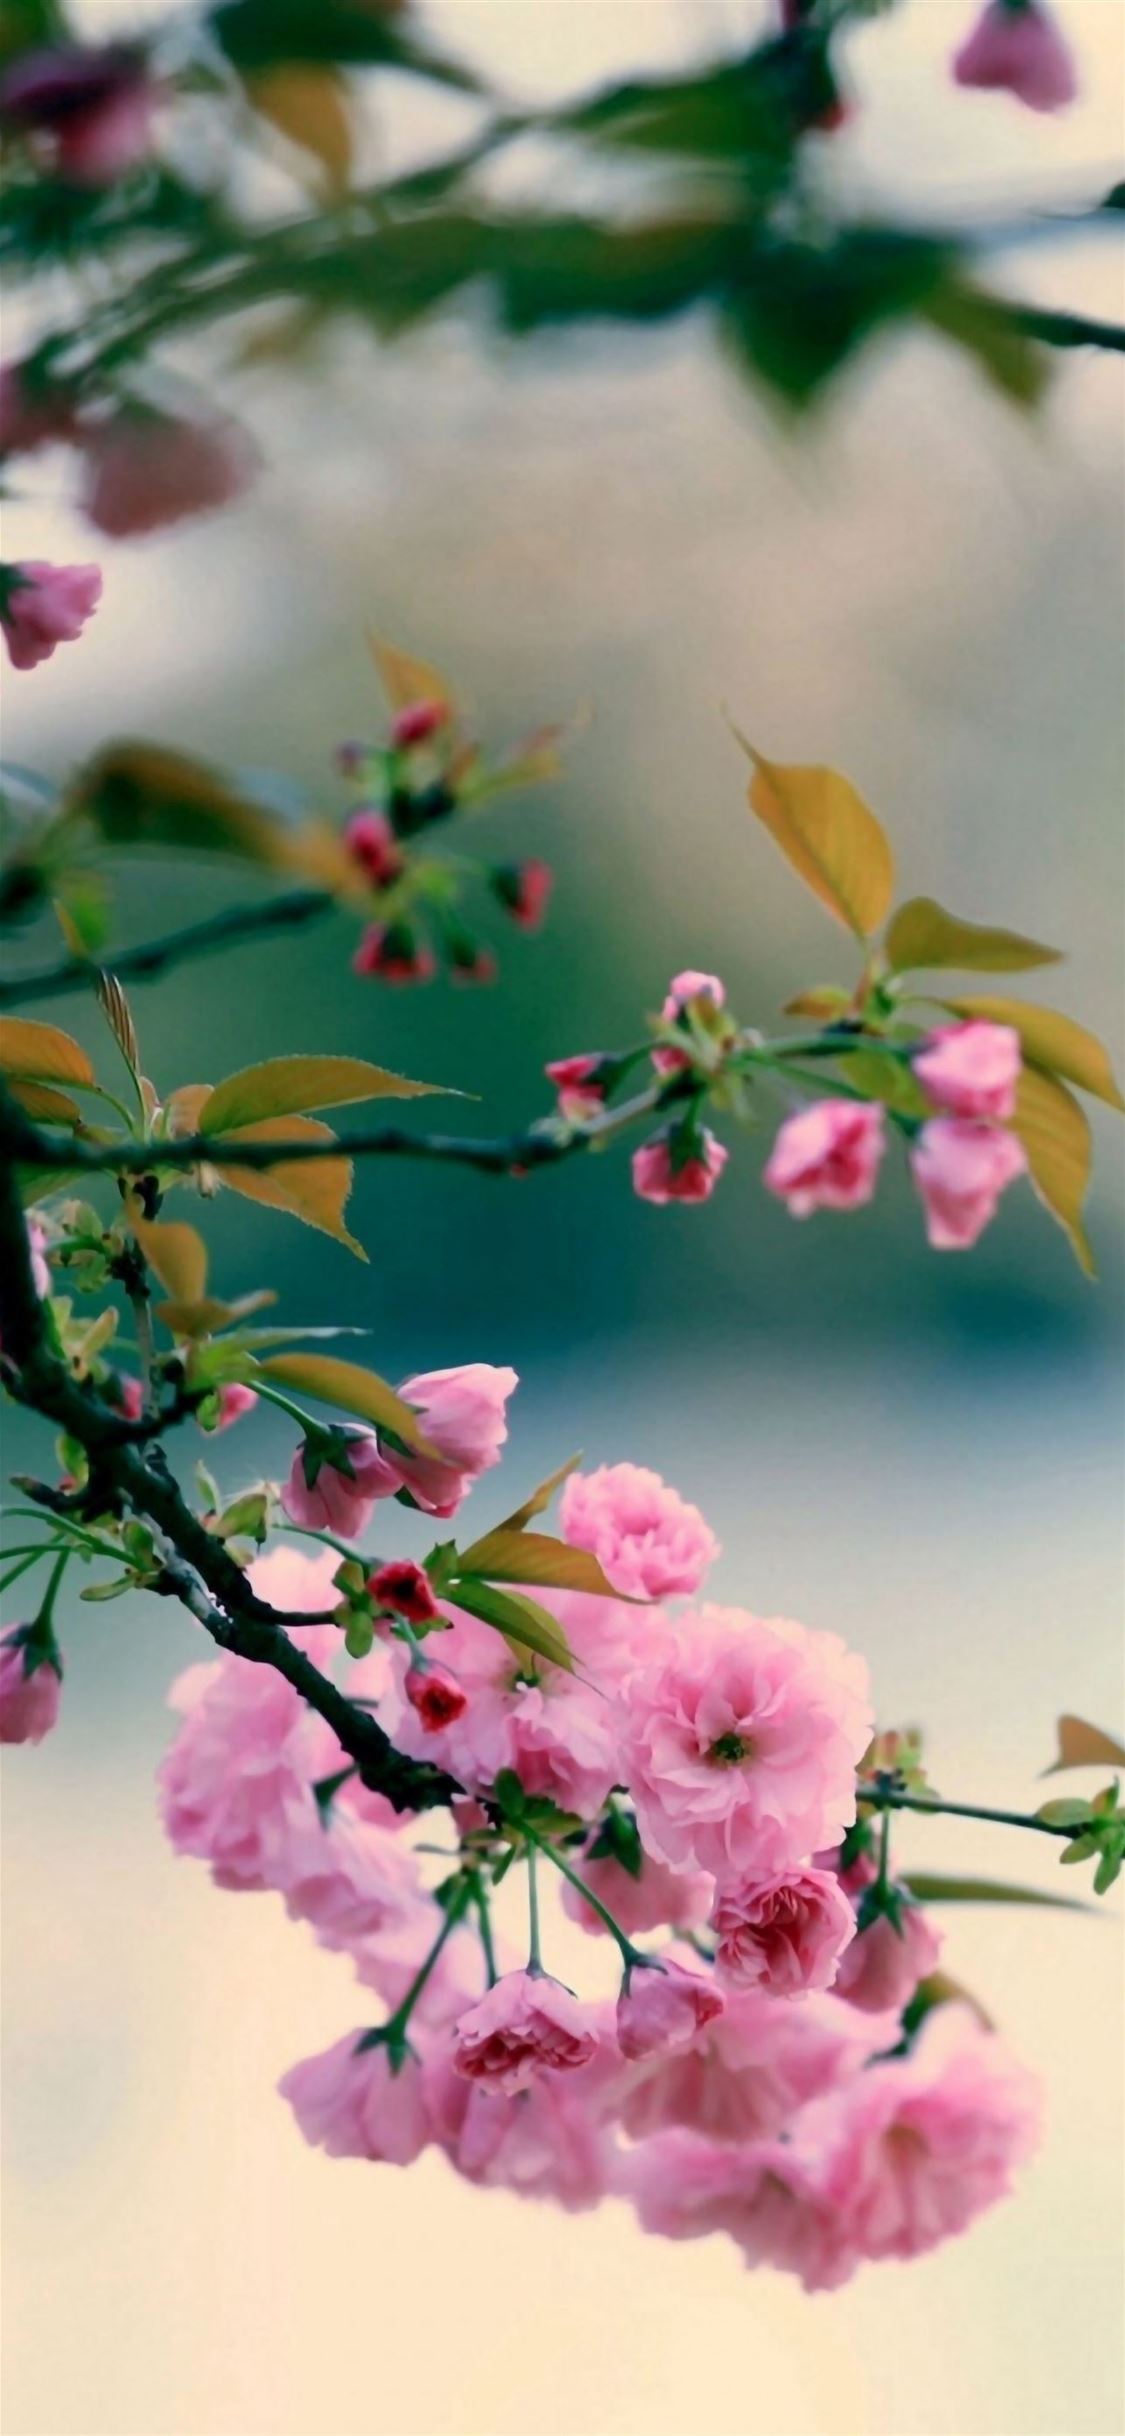 Nature Spring Plum Branch Bokeh Blur iPhone wallpaper 